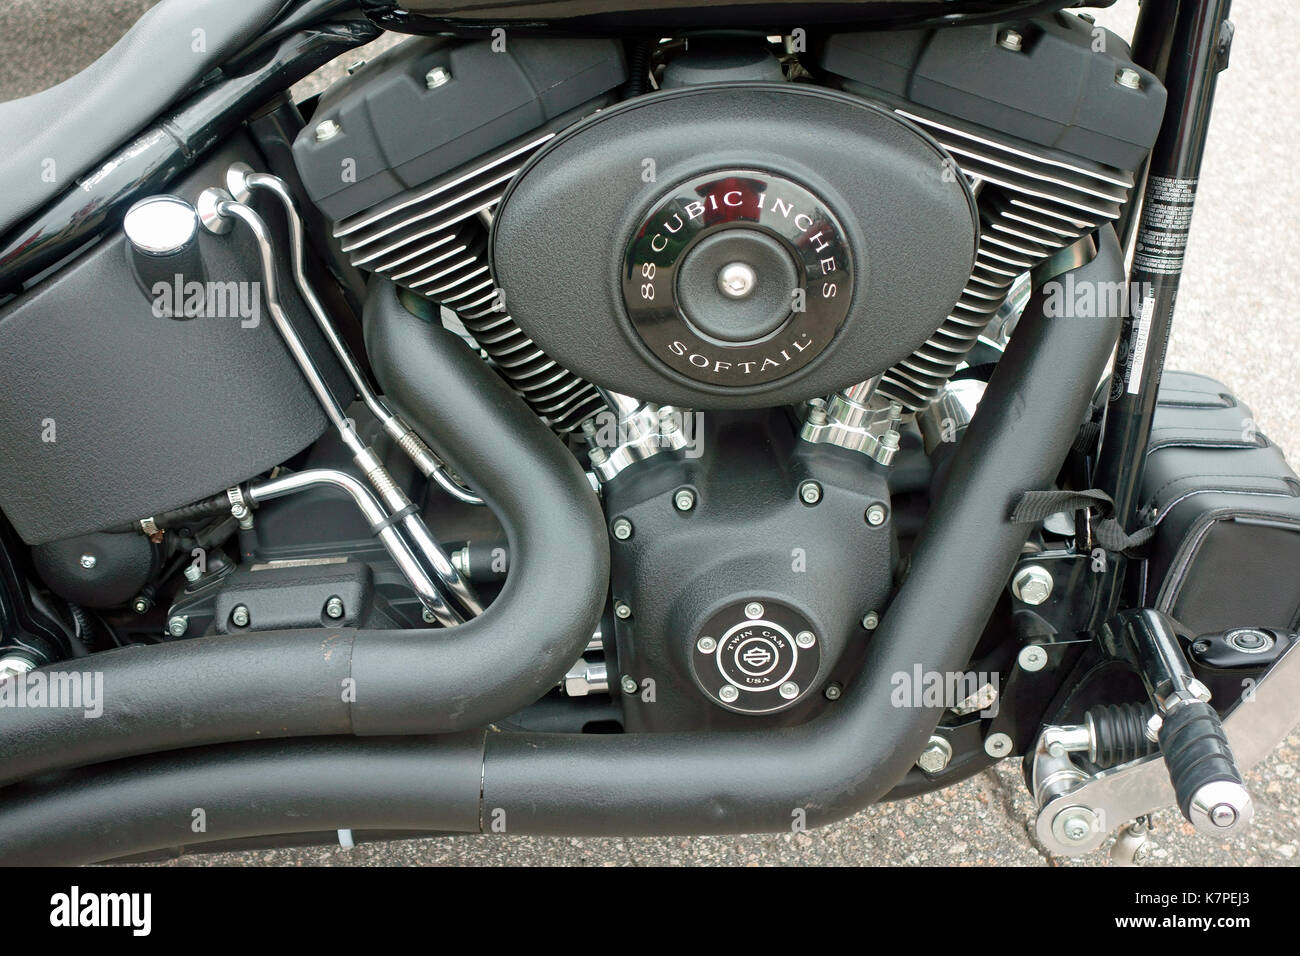 Moteur de moto Harley Davidson Banque D'Images